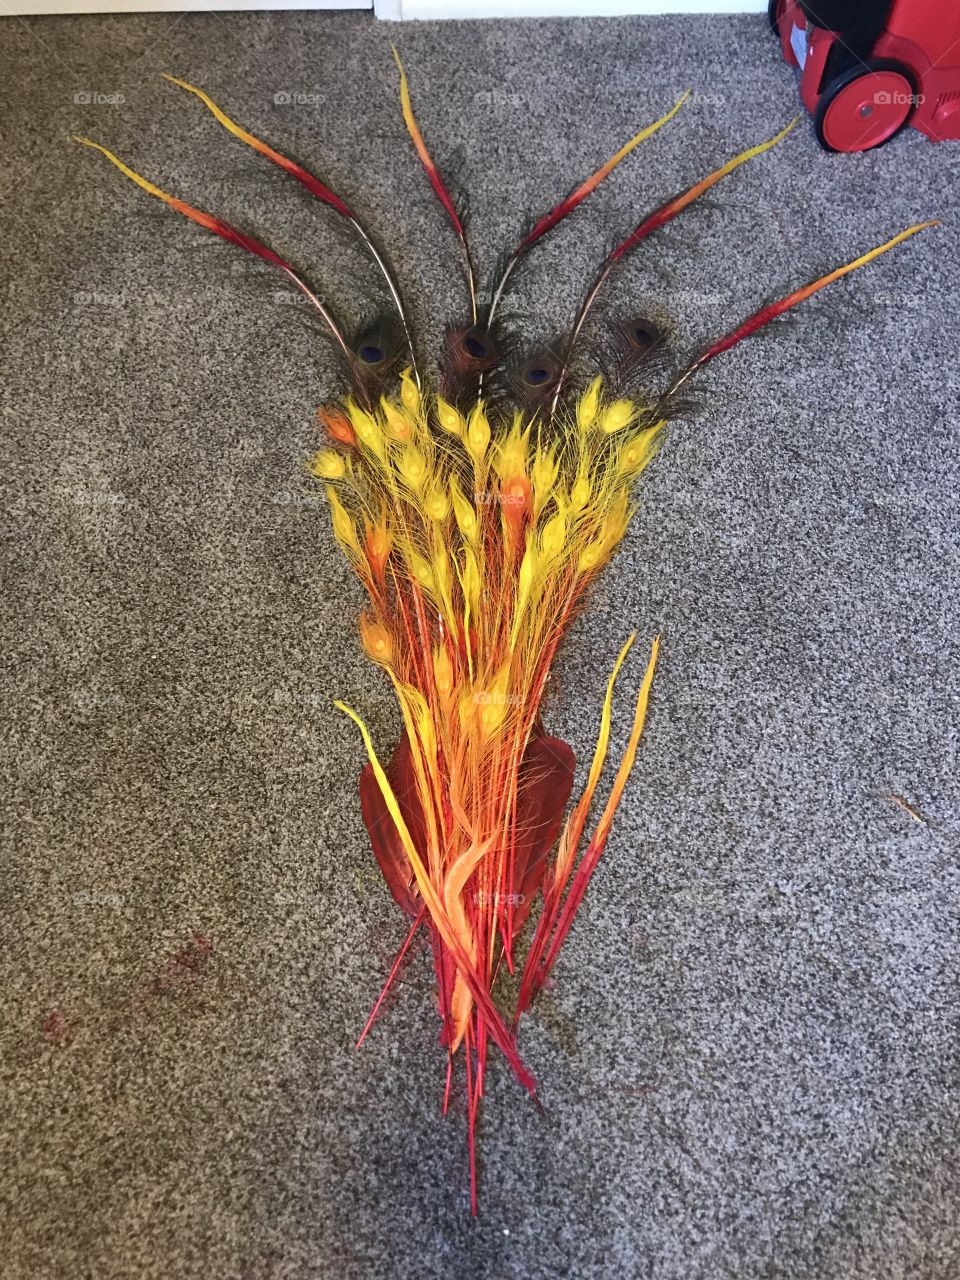 Making Phoenix fire bird tail 